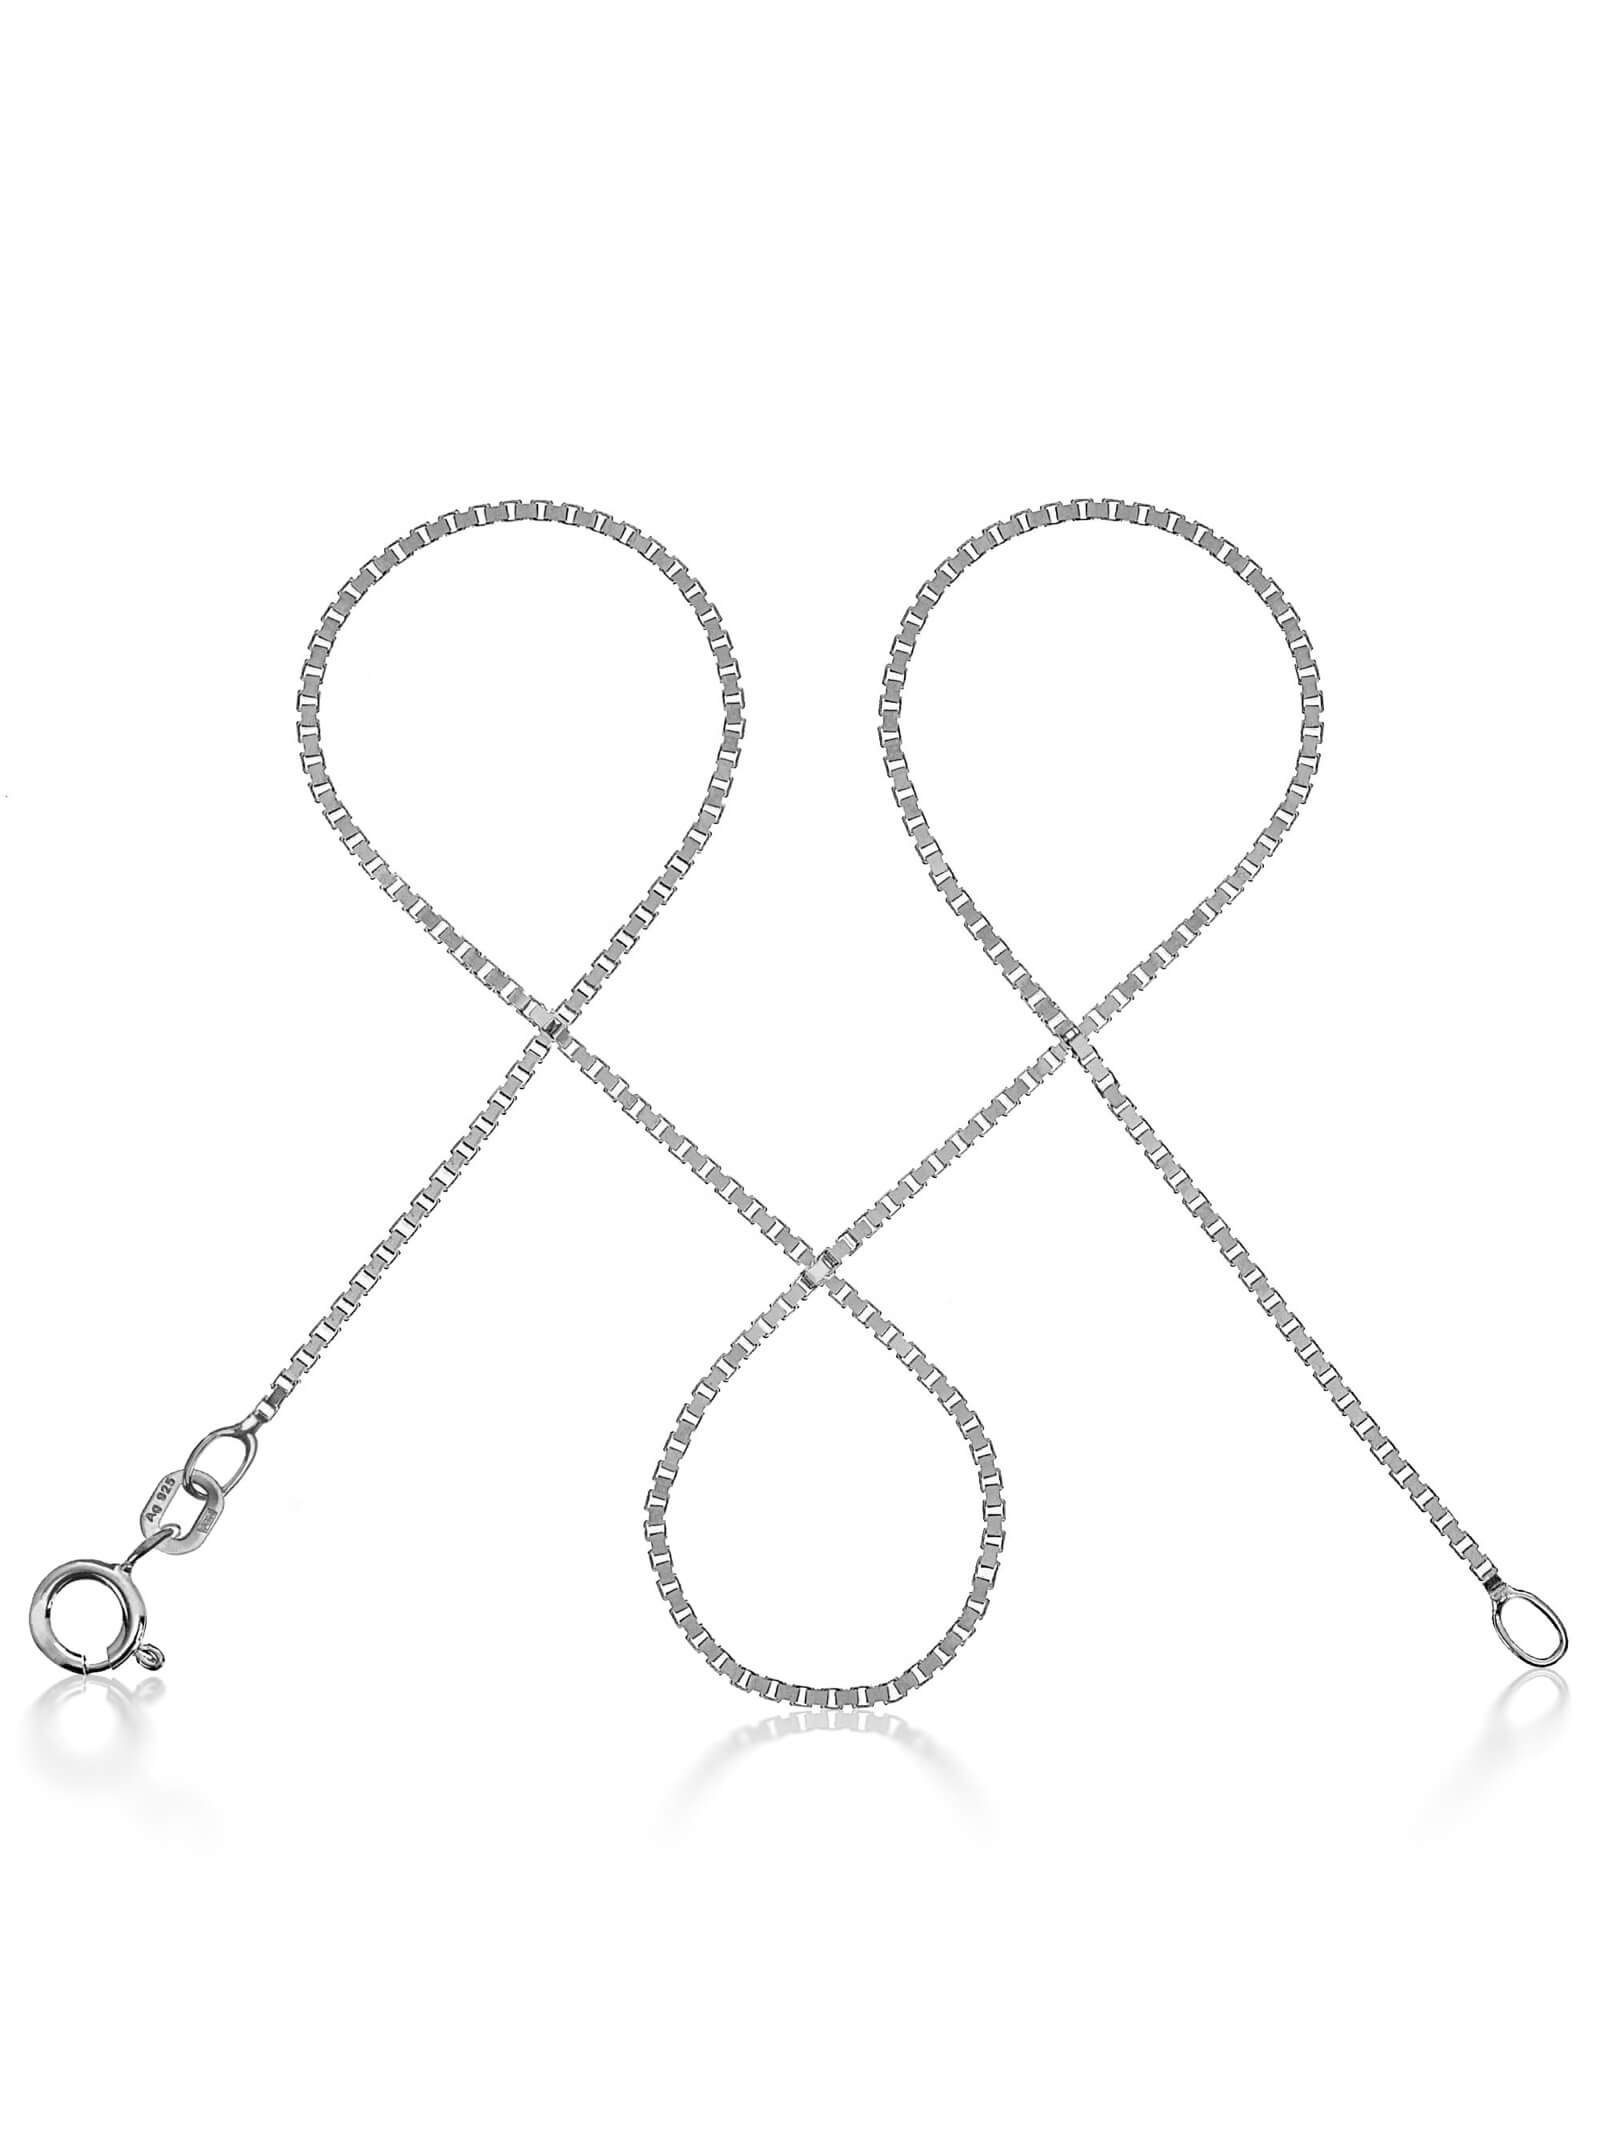 modabilé Kette ohne Anhänger Halskette VENICE, Damen Venezianerkette 1,2mm  75cm, Sterling Silber 925, Made in Germany